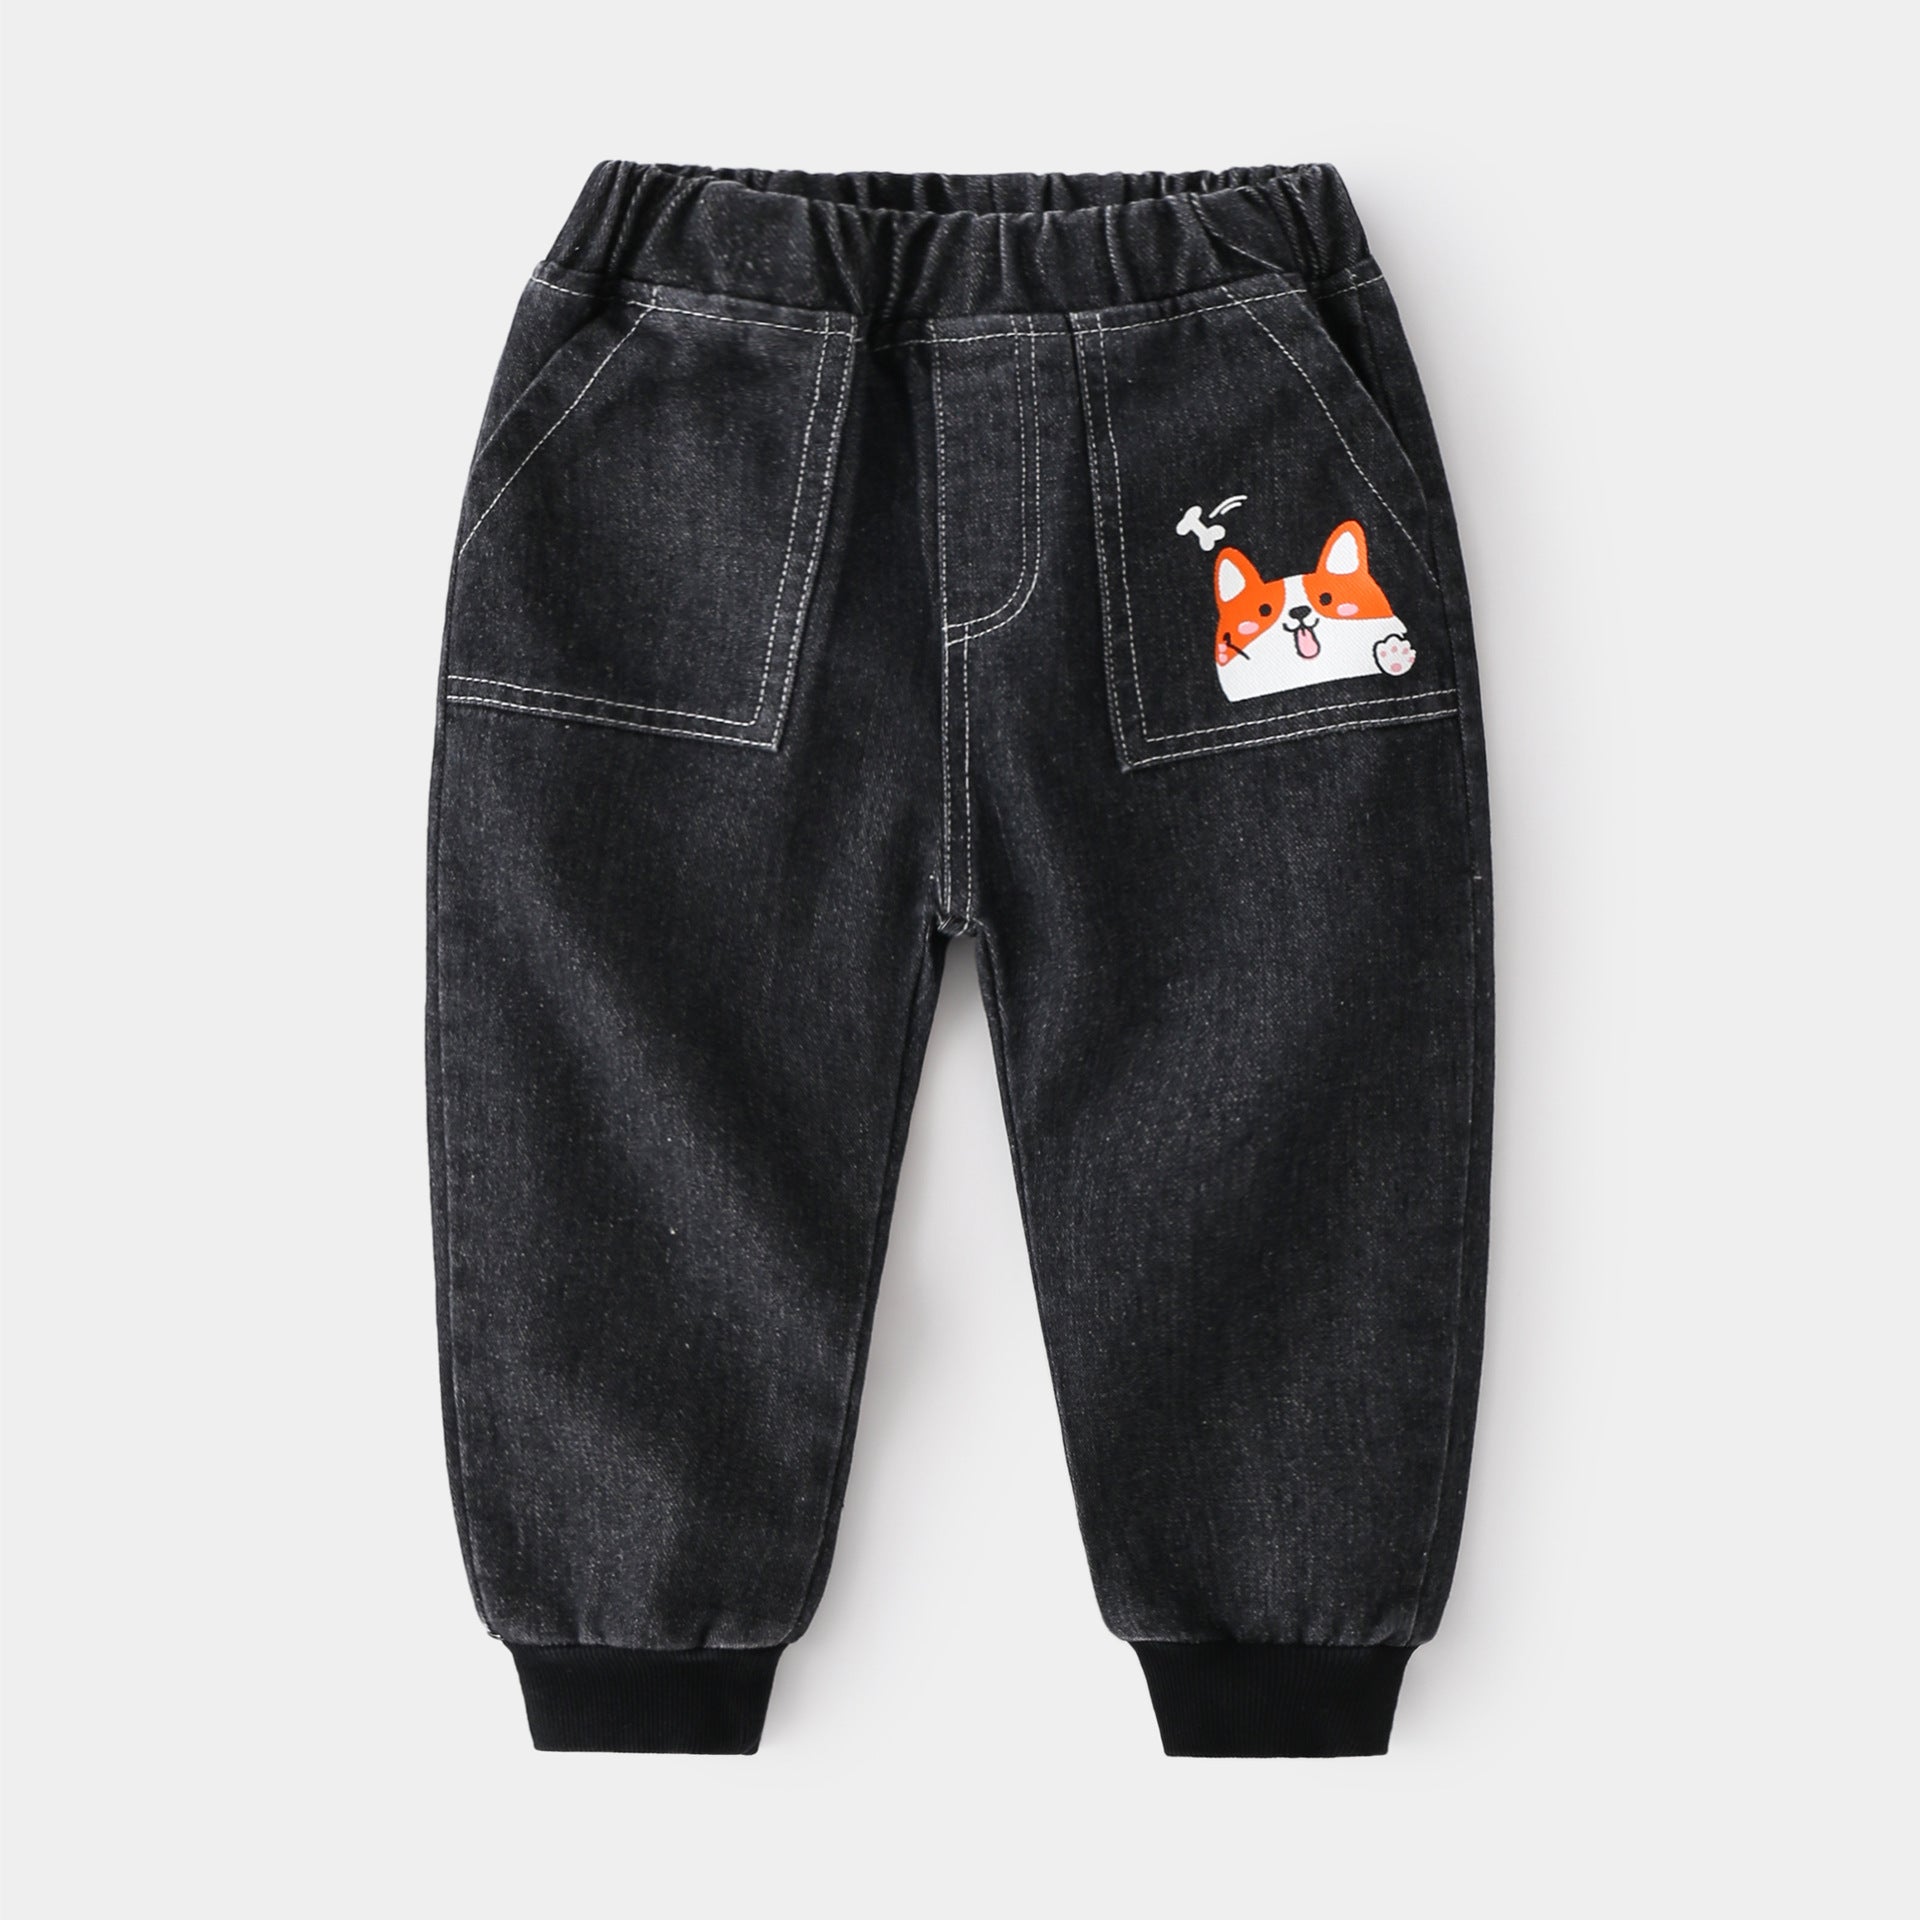 [513293] - Bawahan / Celana Jogger Jeans Style Anak Import - Motif Animal Cartoon